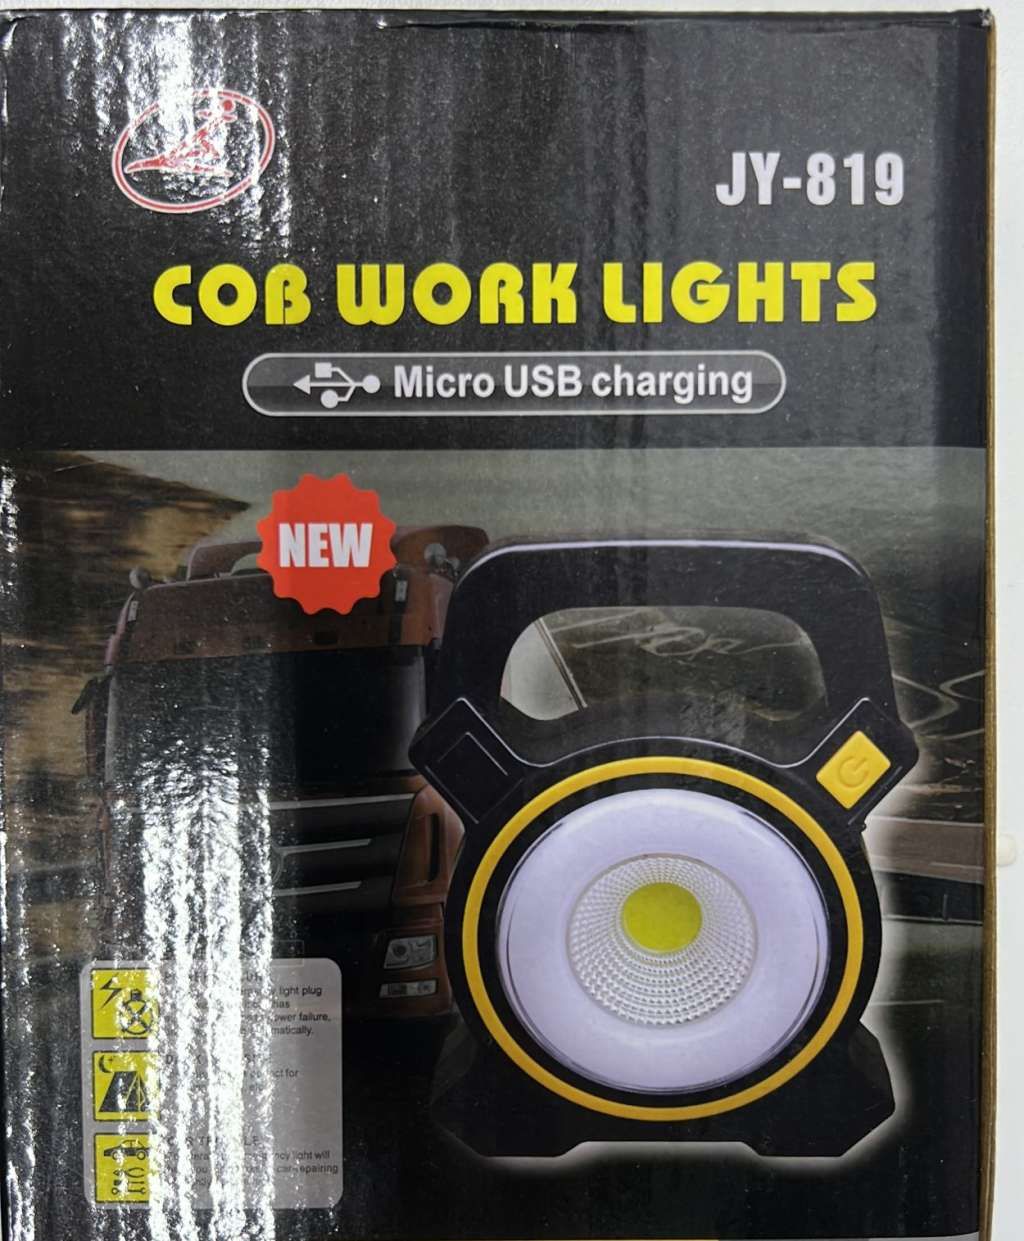 CHA-Cob Work Lights(EMERGENCY LIGHT) JY-819 HC-2